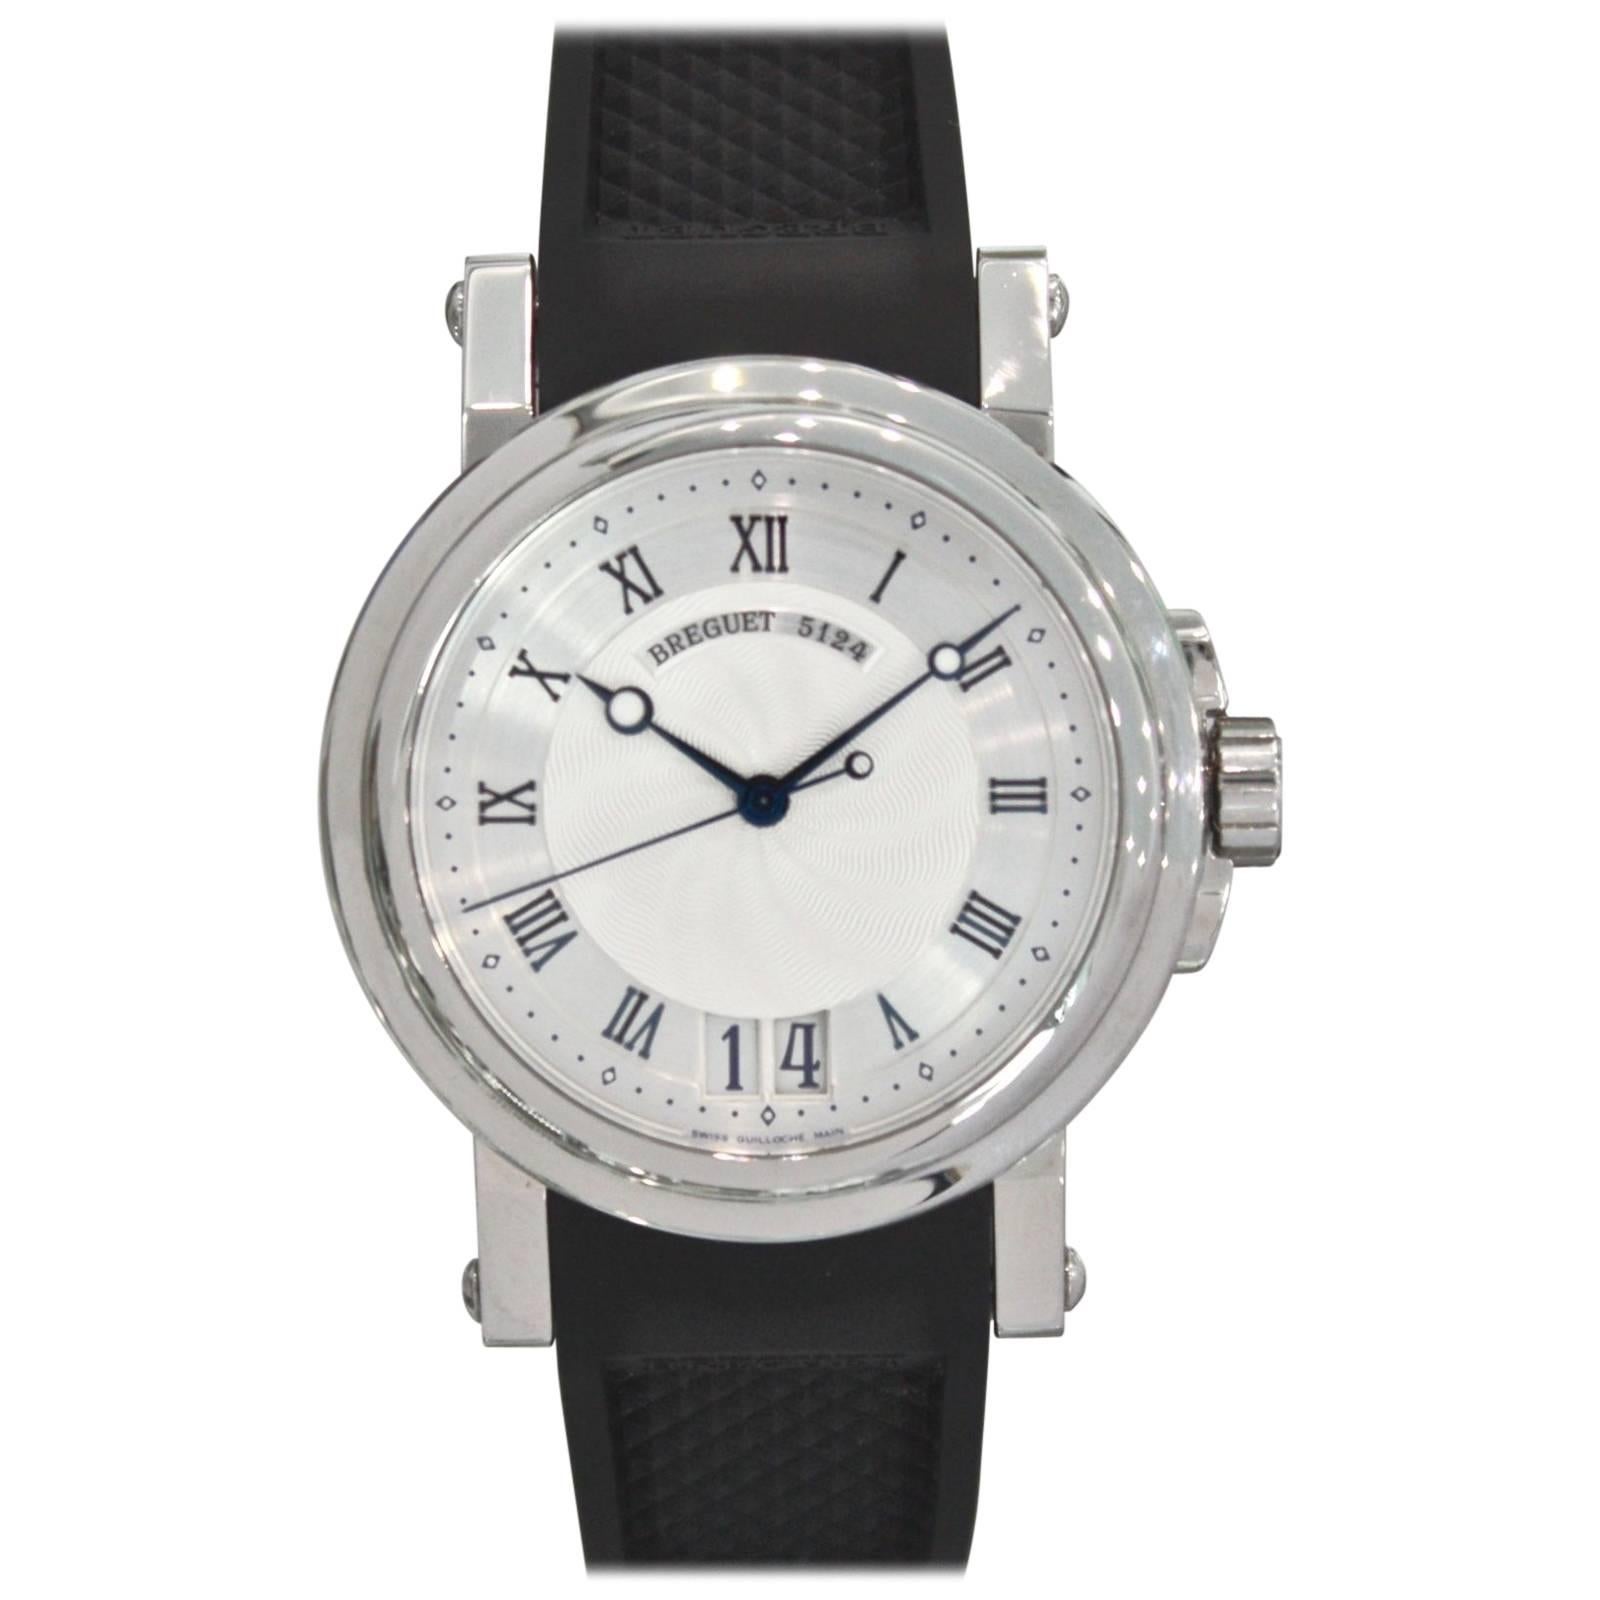 Breguet Stainless Steel Marine Automatic Big Date Wristwatch